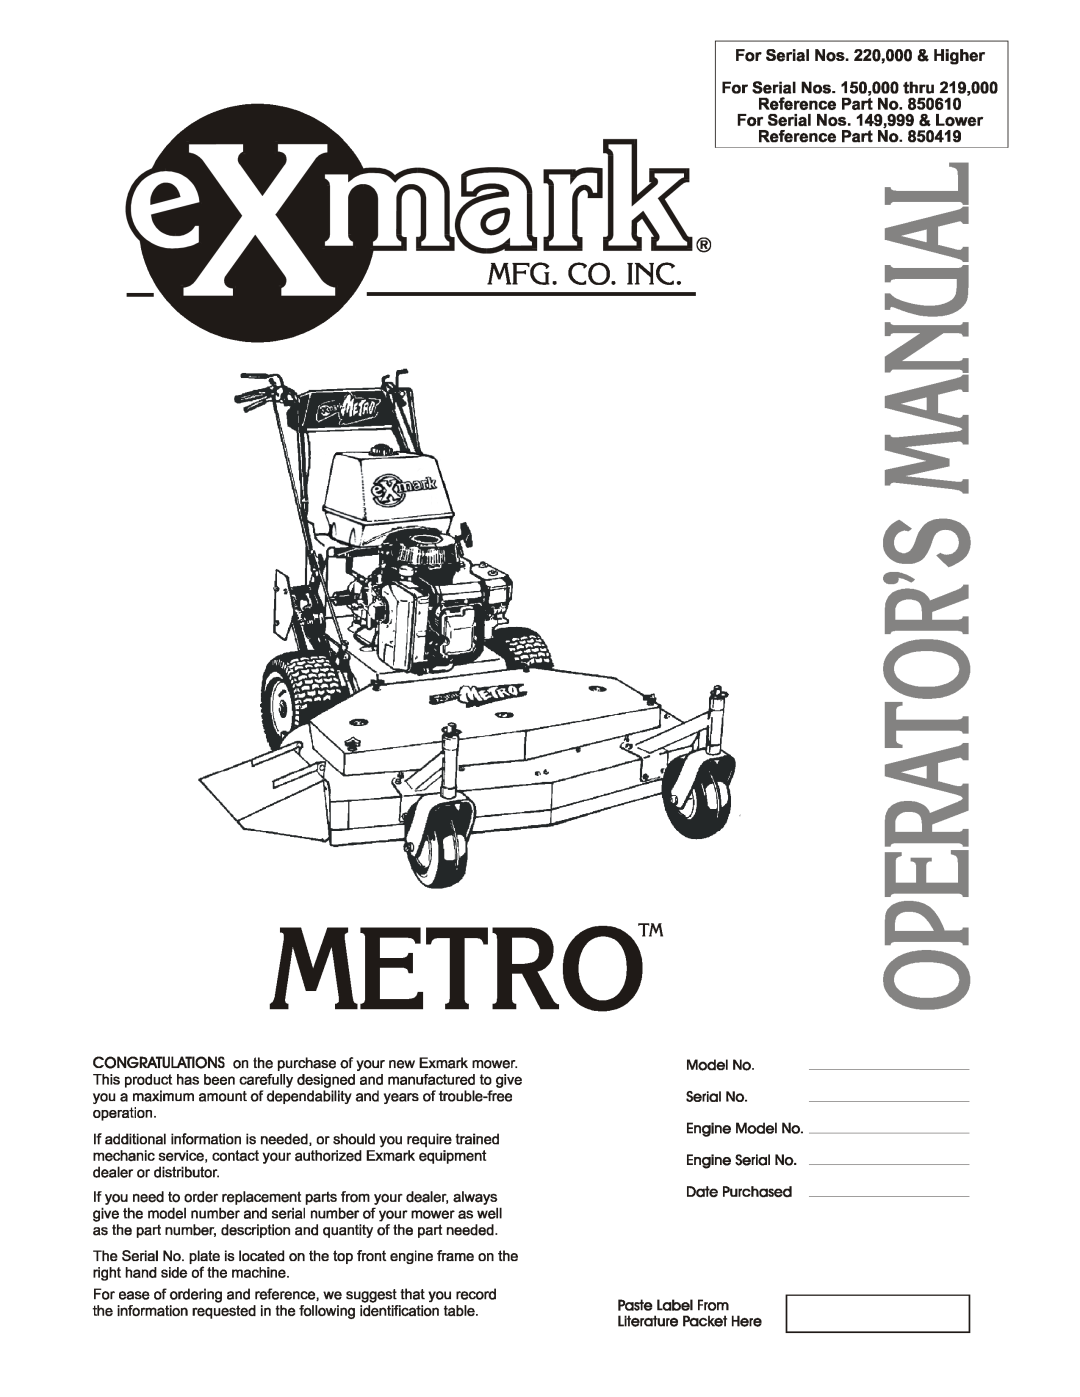 Exmark Metro manual 